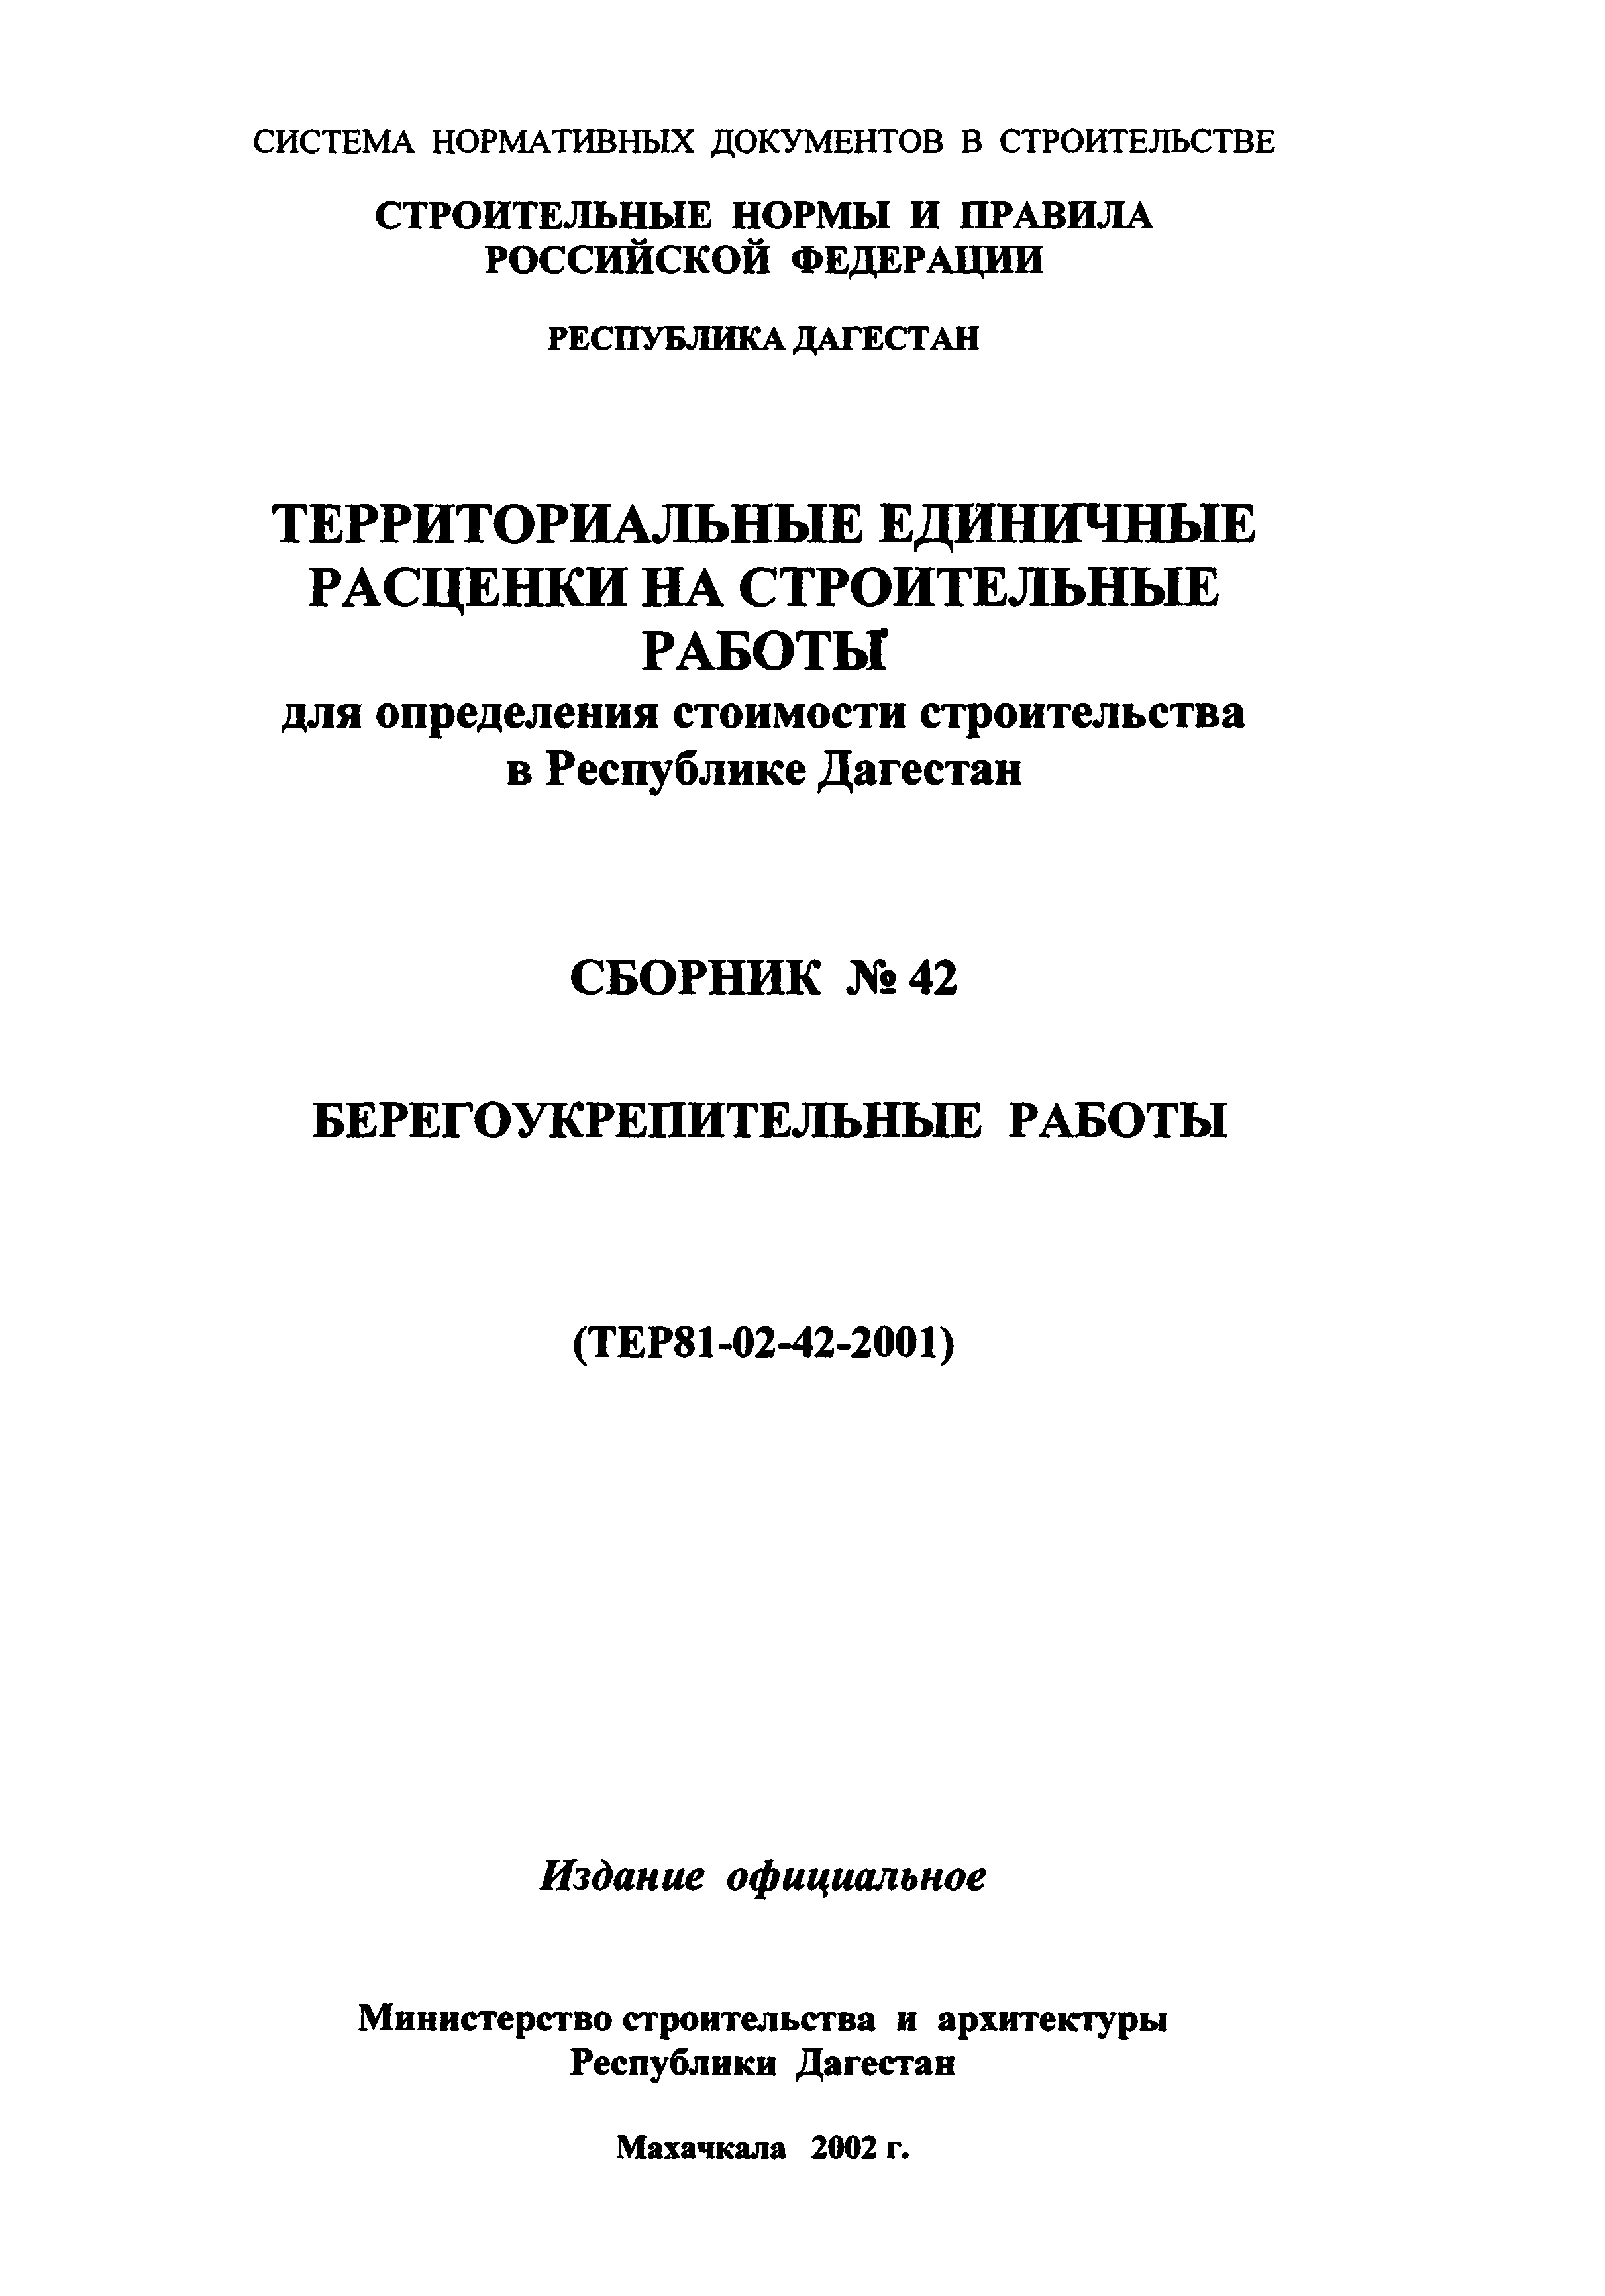 ТЕР Республика Дагестан 2001-42